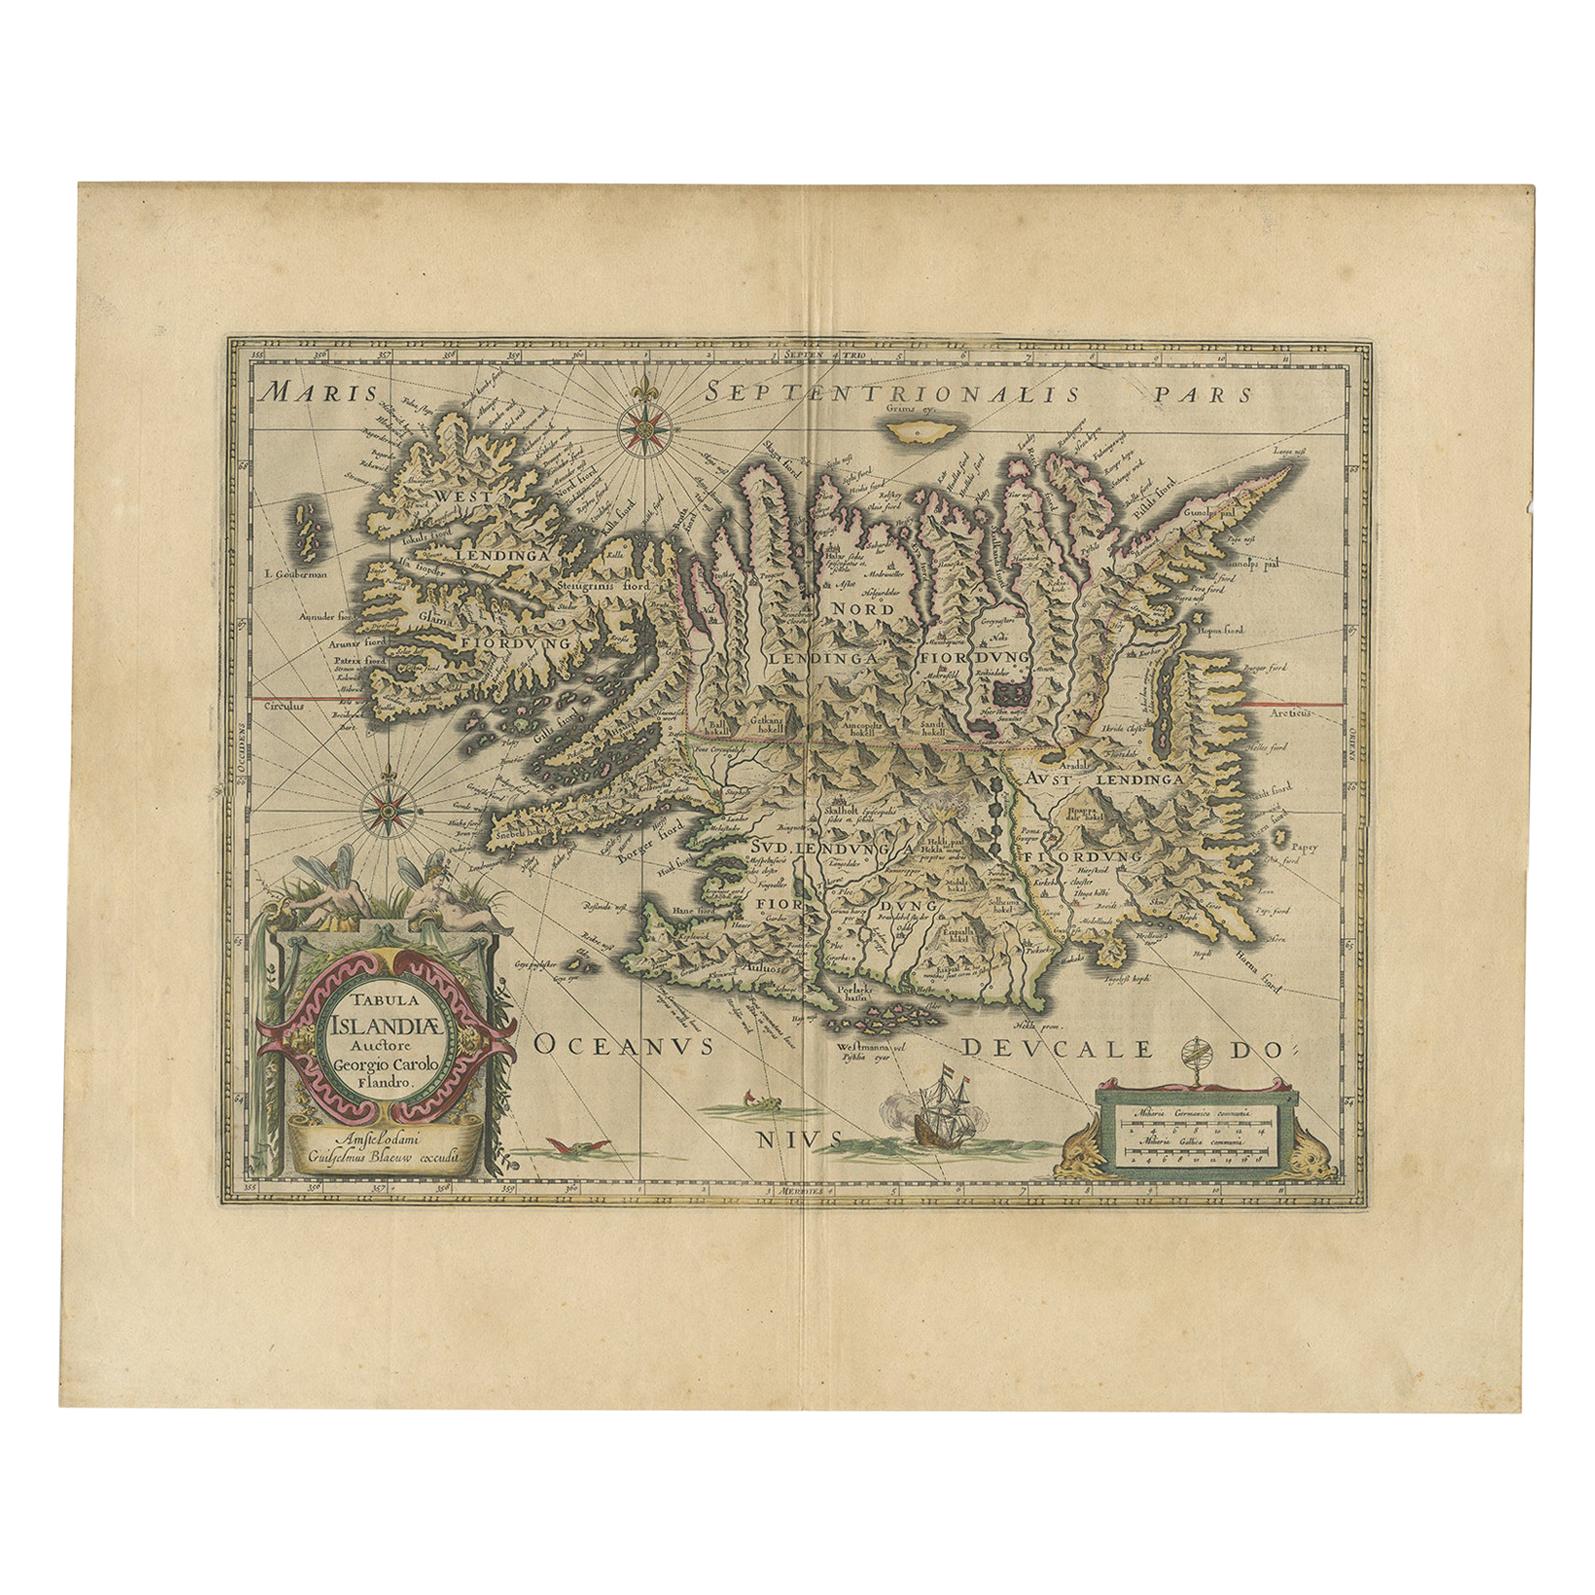 Antique Map of Iceland by Blaeu, circa 1640